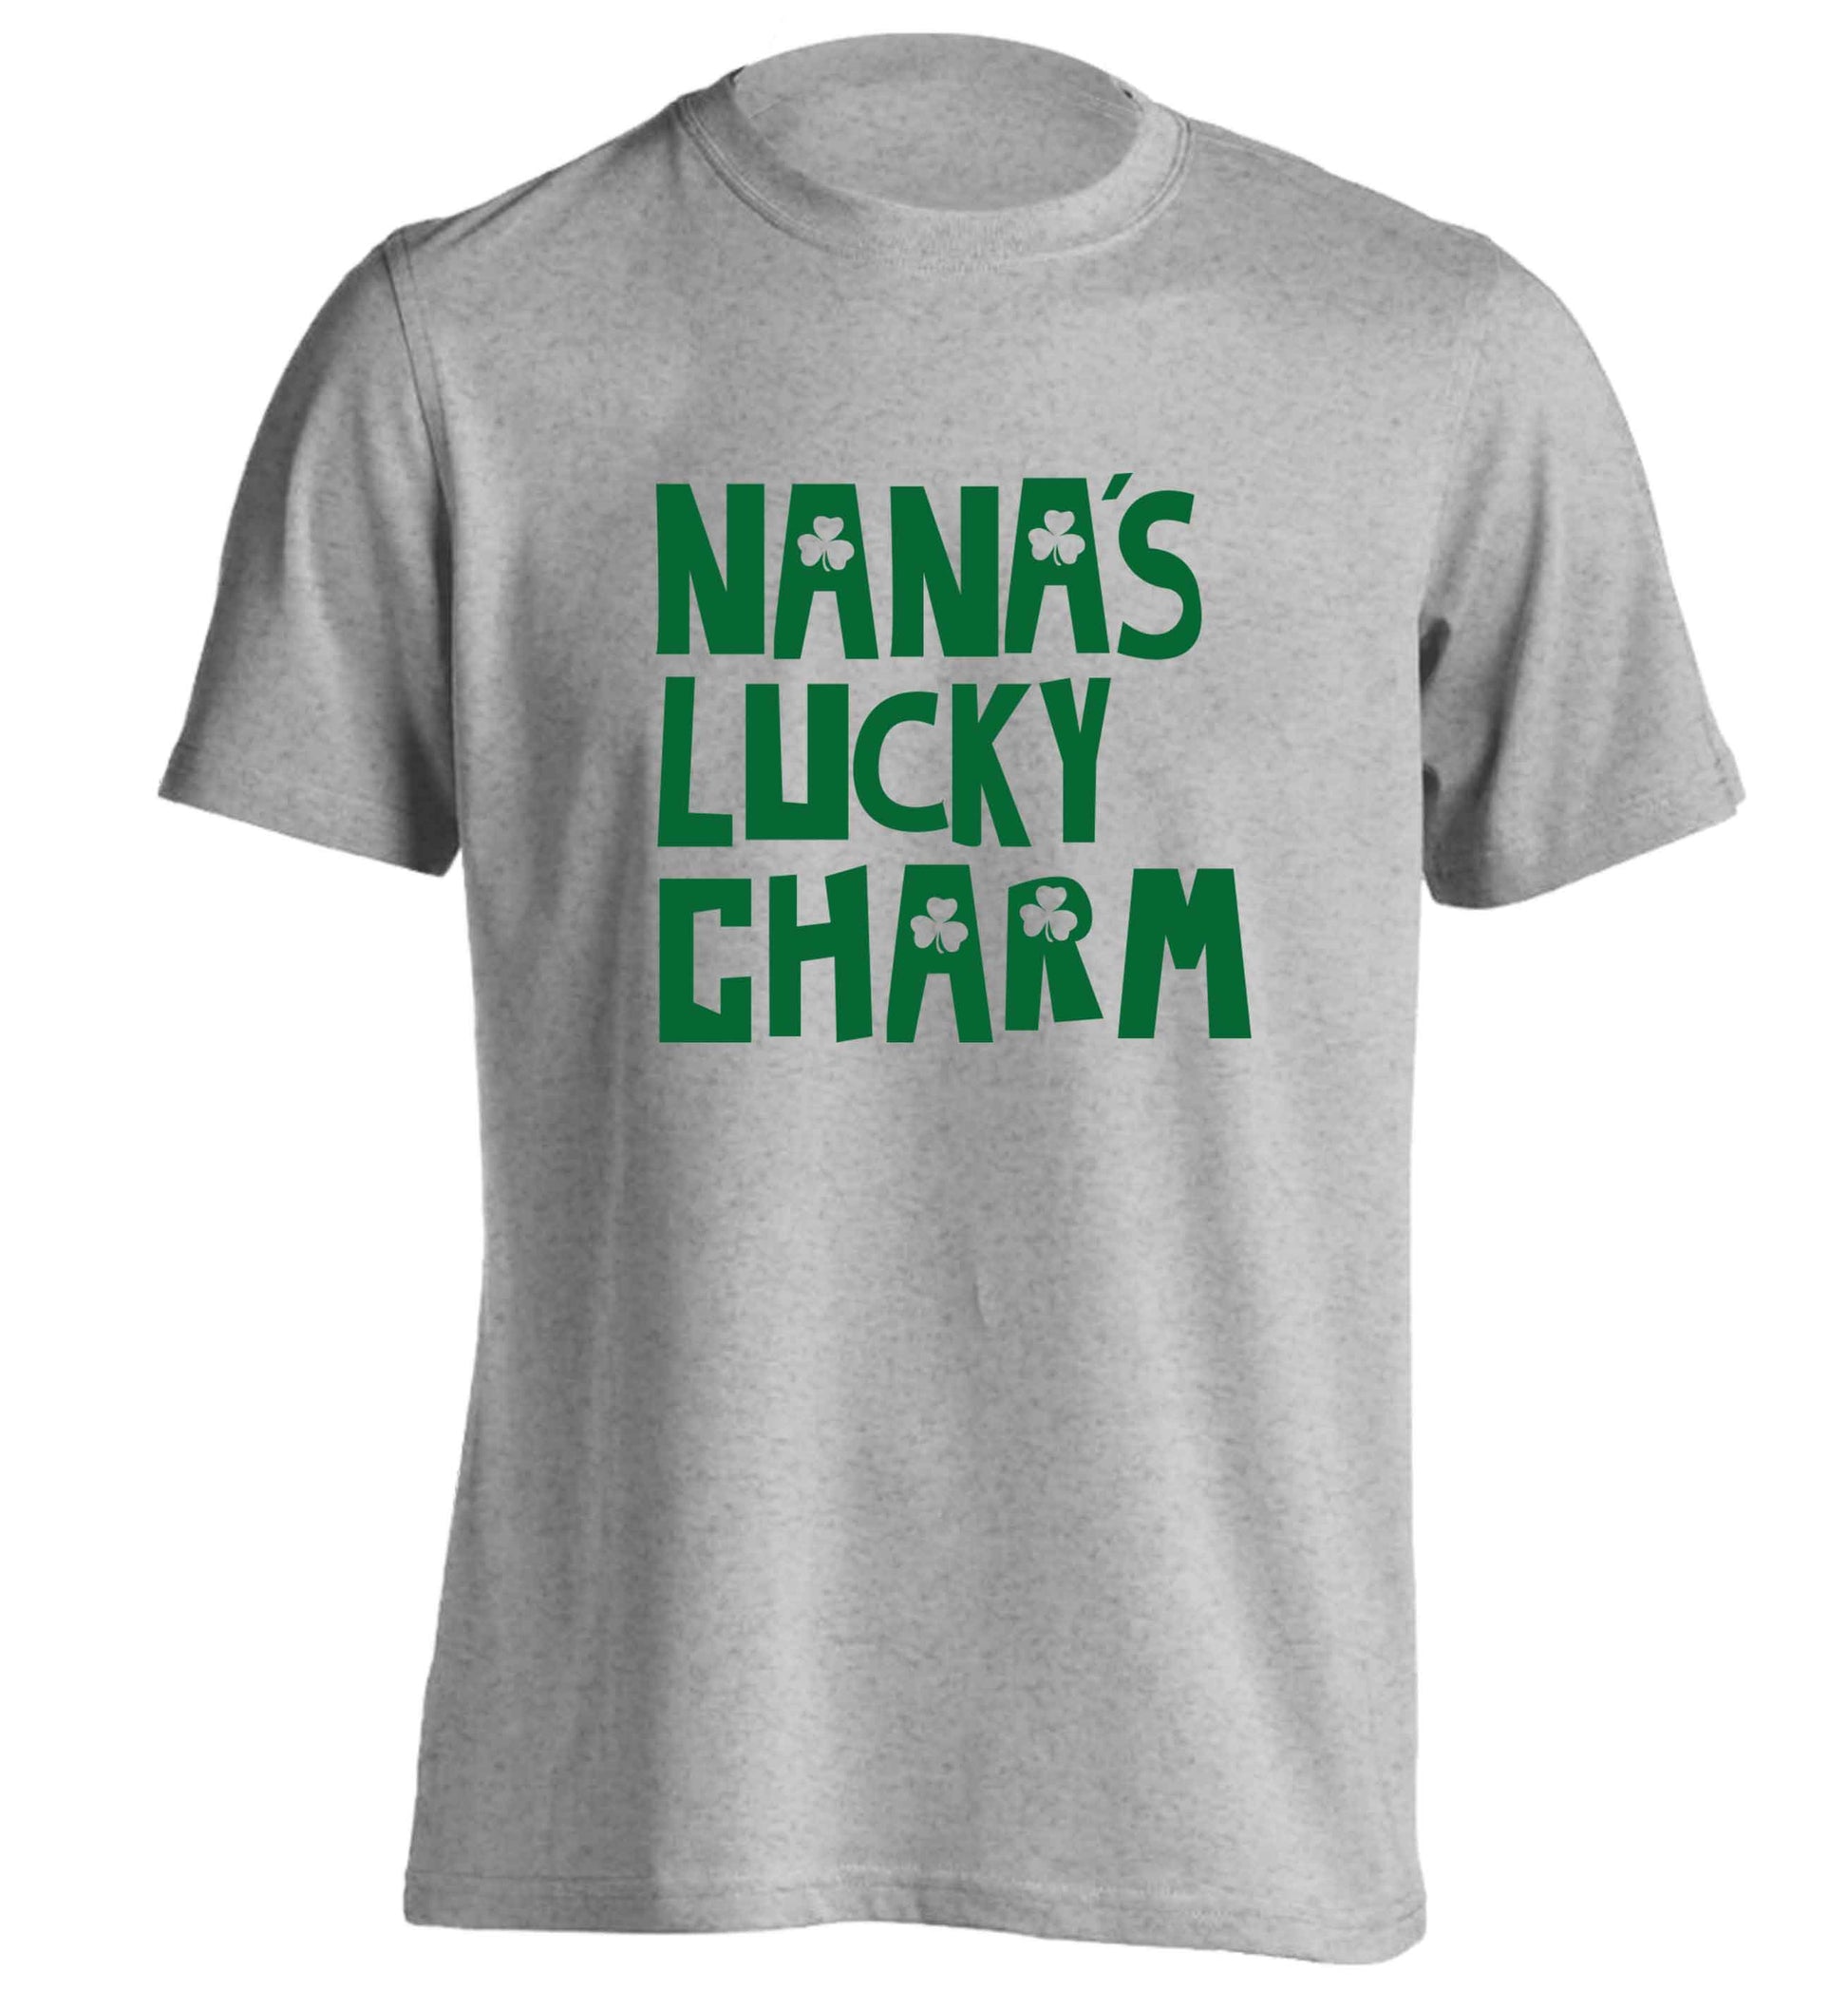 Nana's lucky charm adults unisex grey Tshirt 2XL